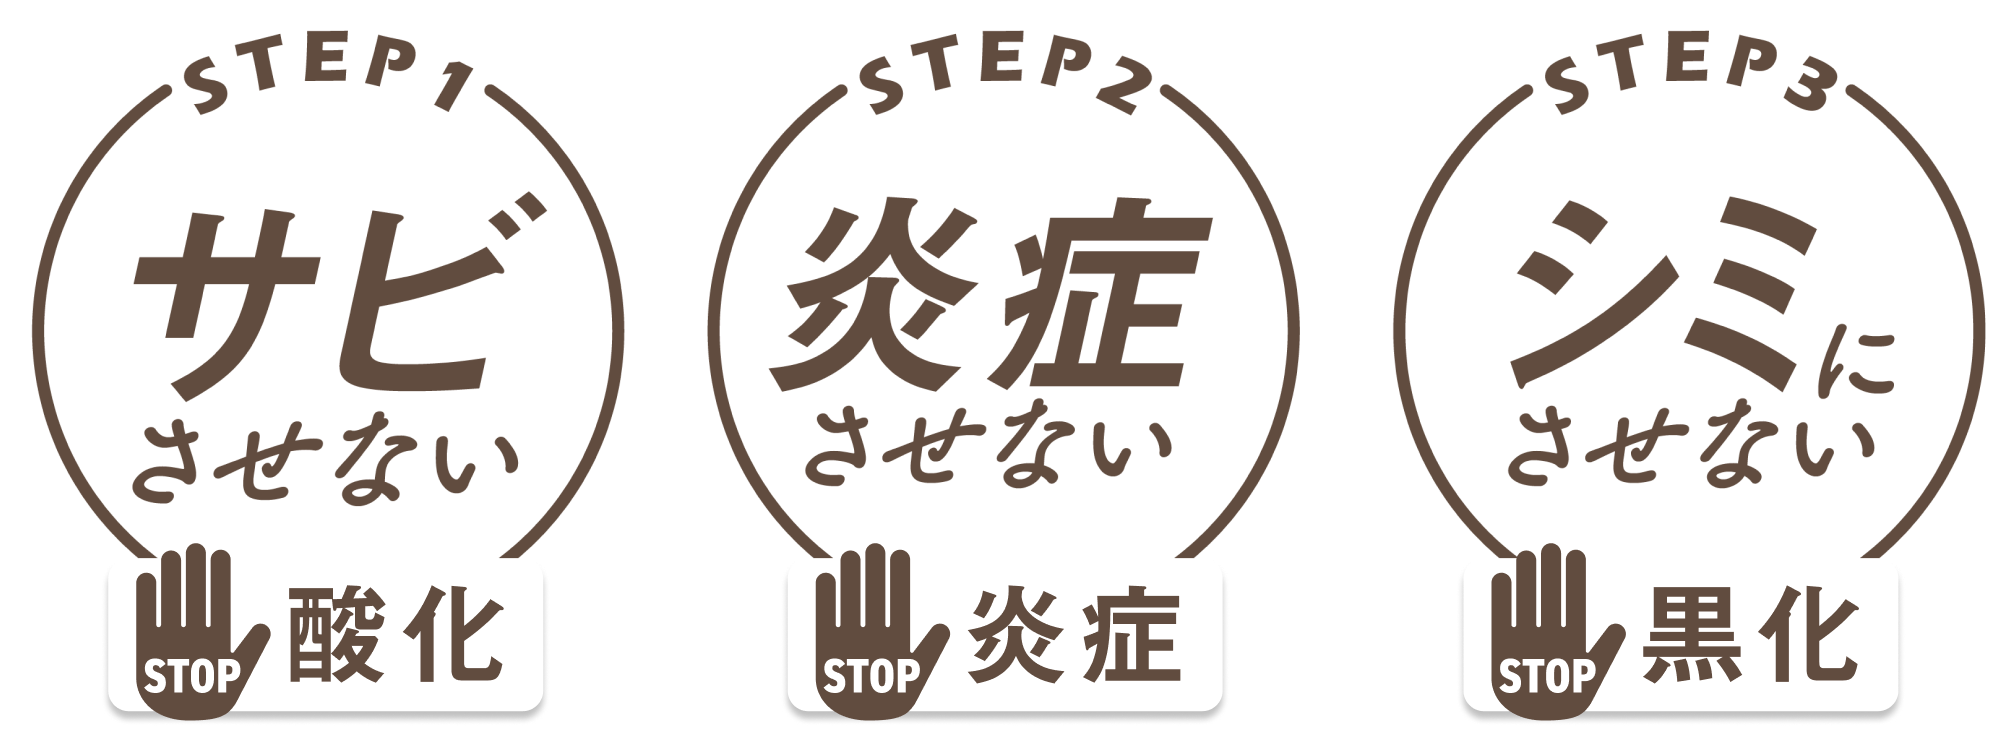 STEP1 サビさせない STOP酸化　STEP2 炎症させない STOP炎症　STEP3 シミにさせない STOP黒化